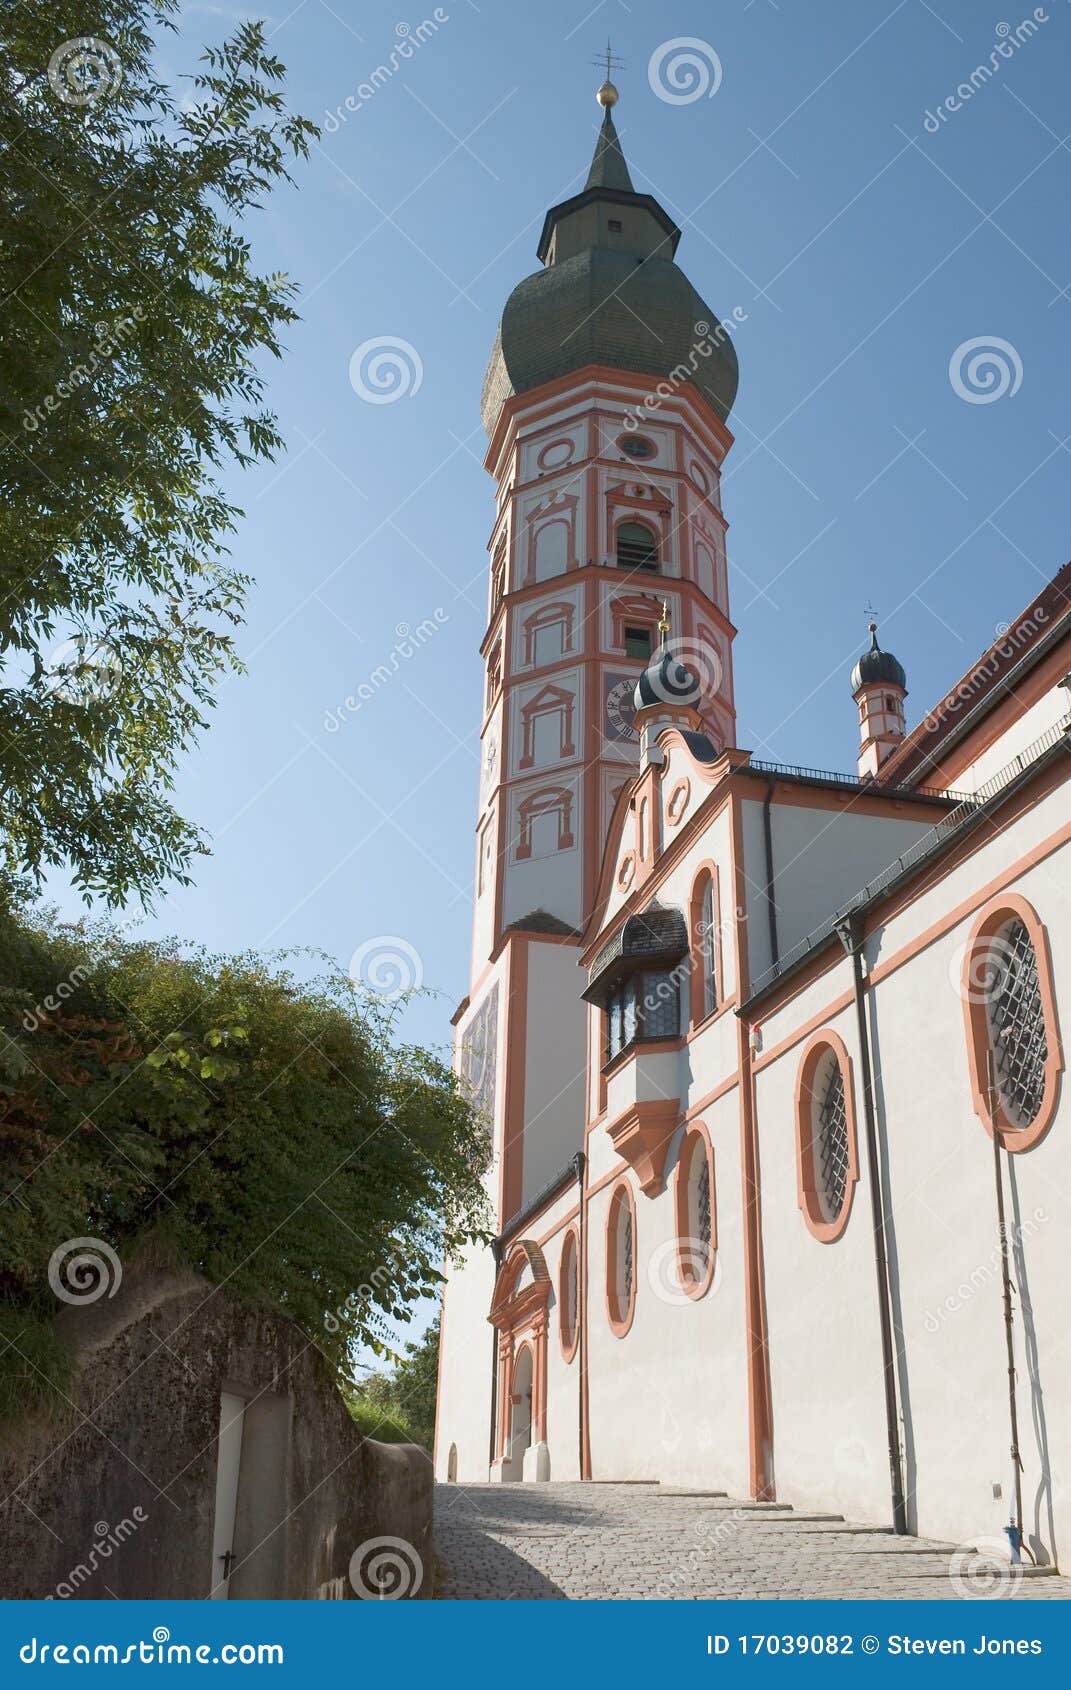 andechs-monastery-in-bavaria-stock-photo-image-of-facade-landmark